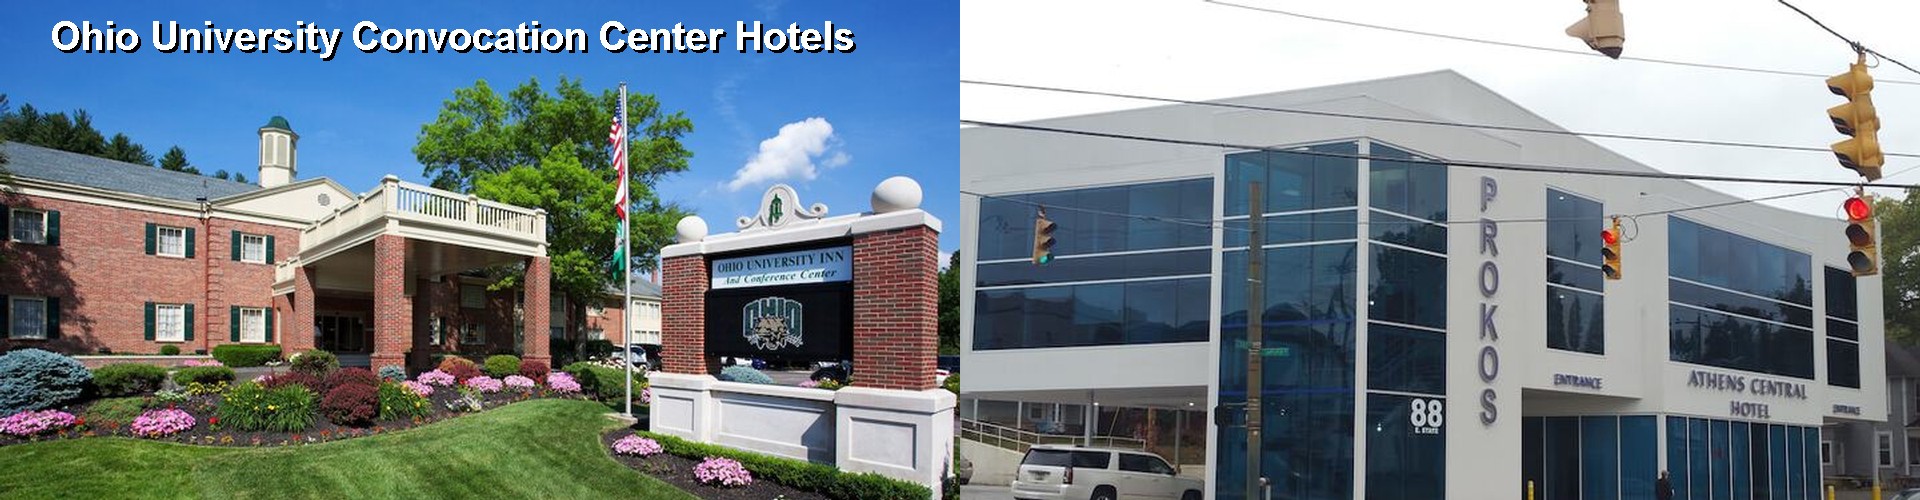 5 Best Hotels near Ohio University Convocation Center